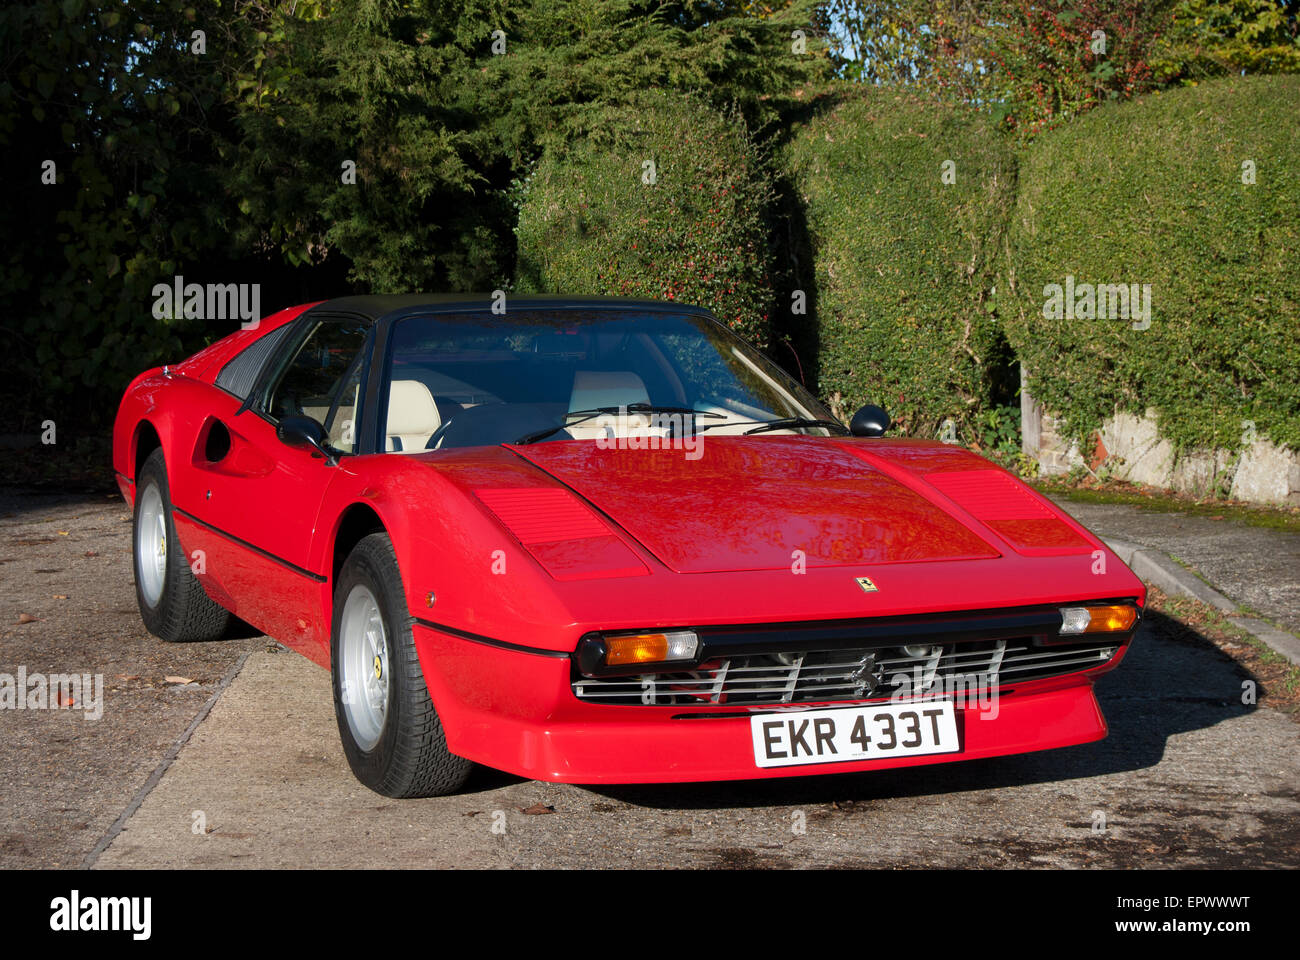 Magnificent red Ferrari 308, classic sports car. Stock Photo